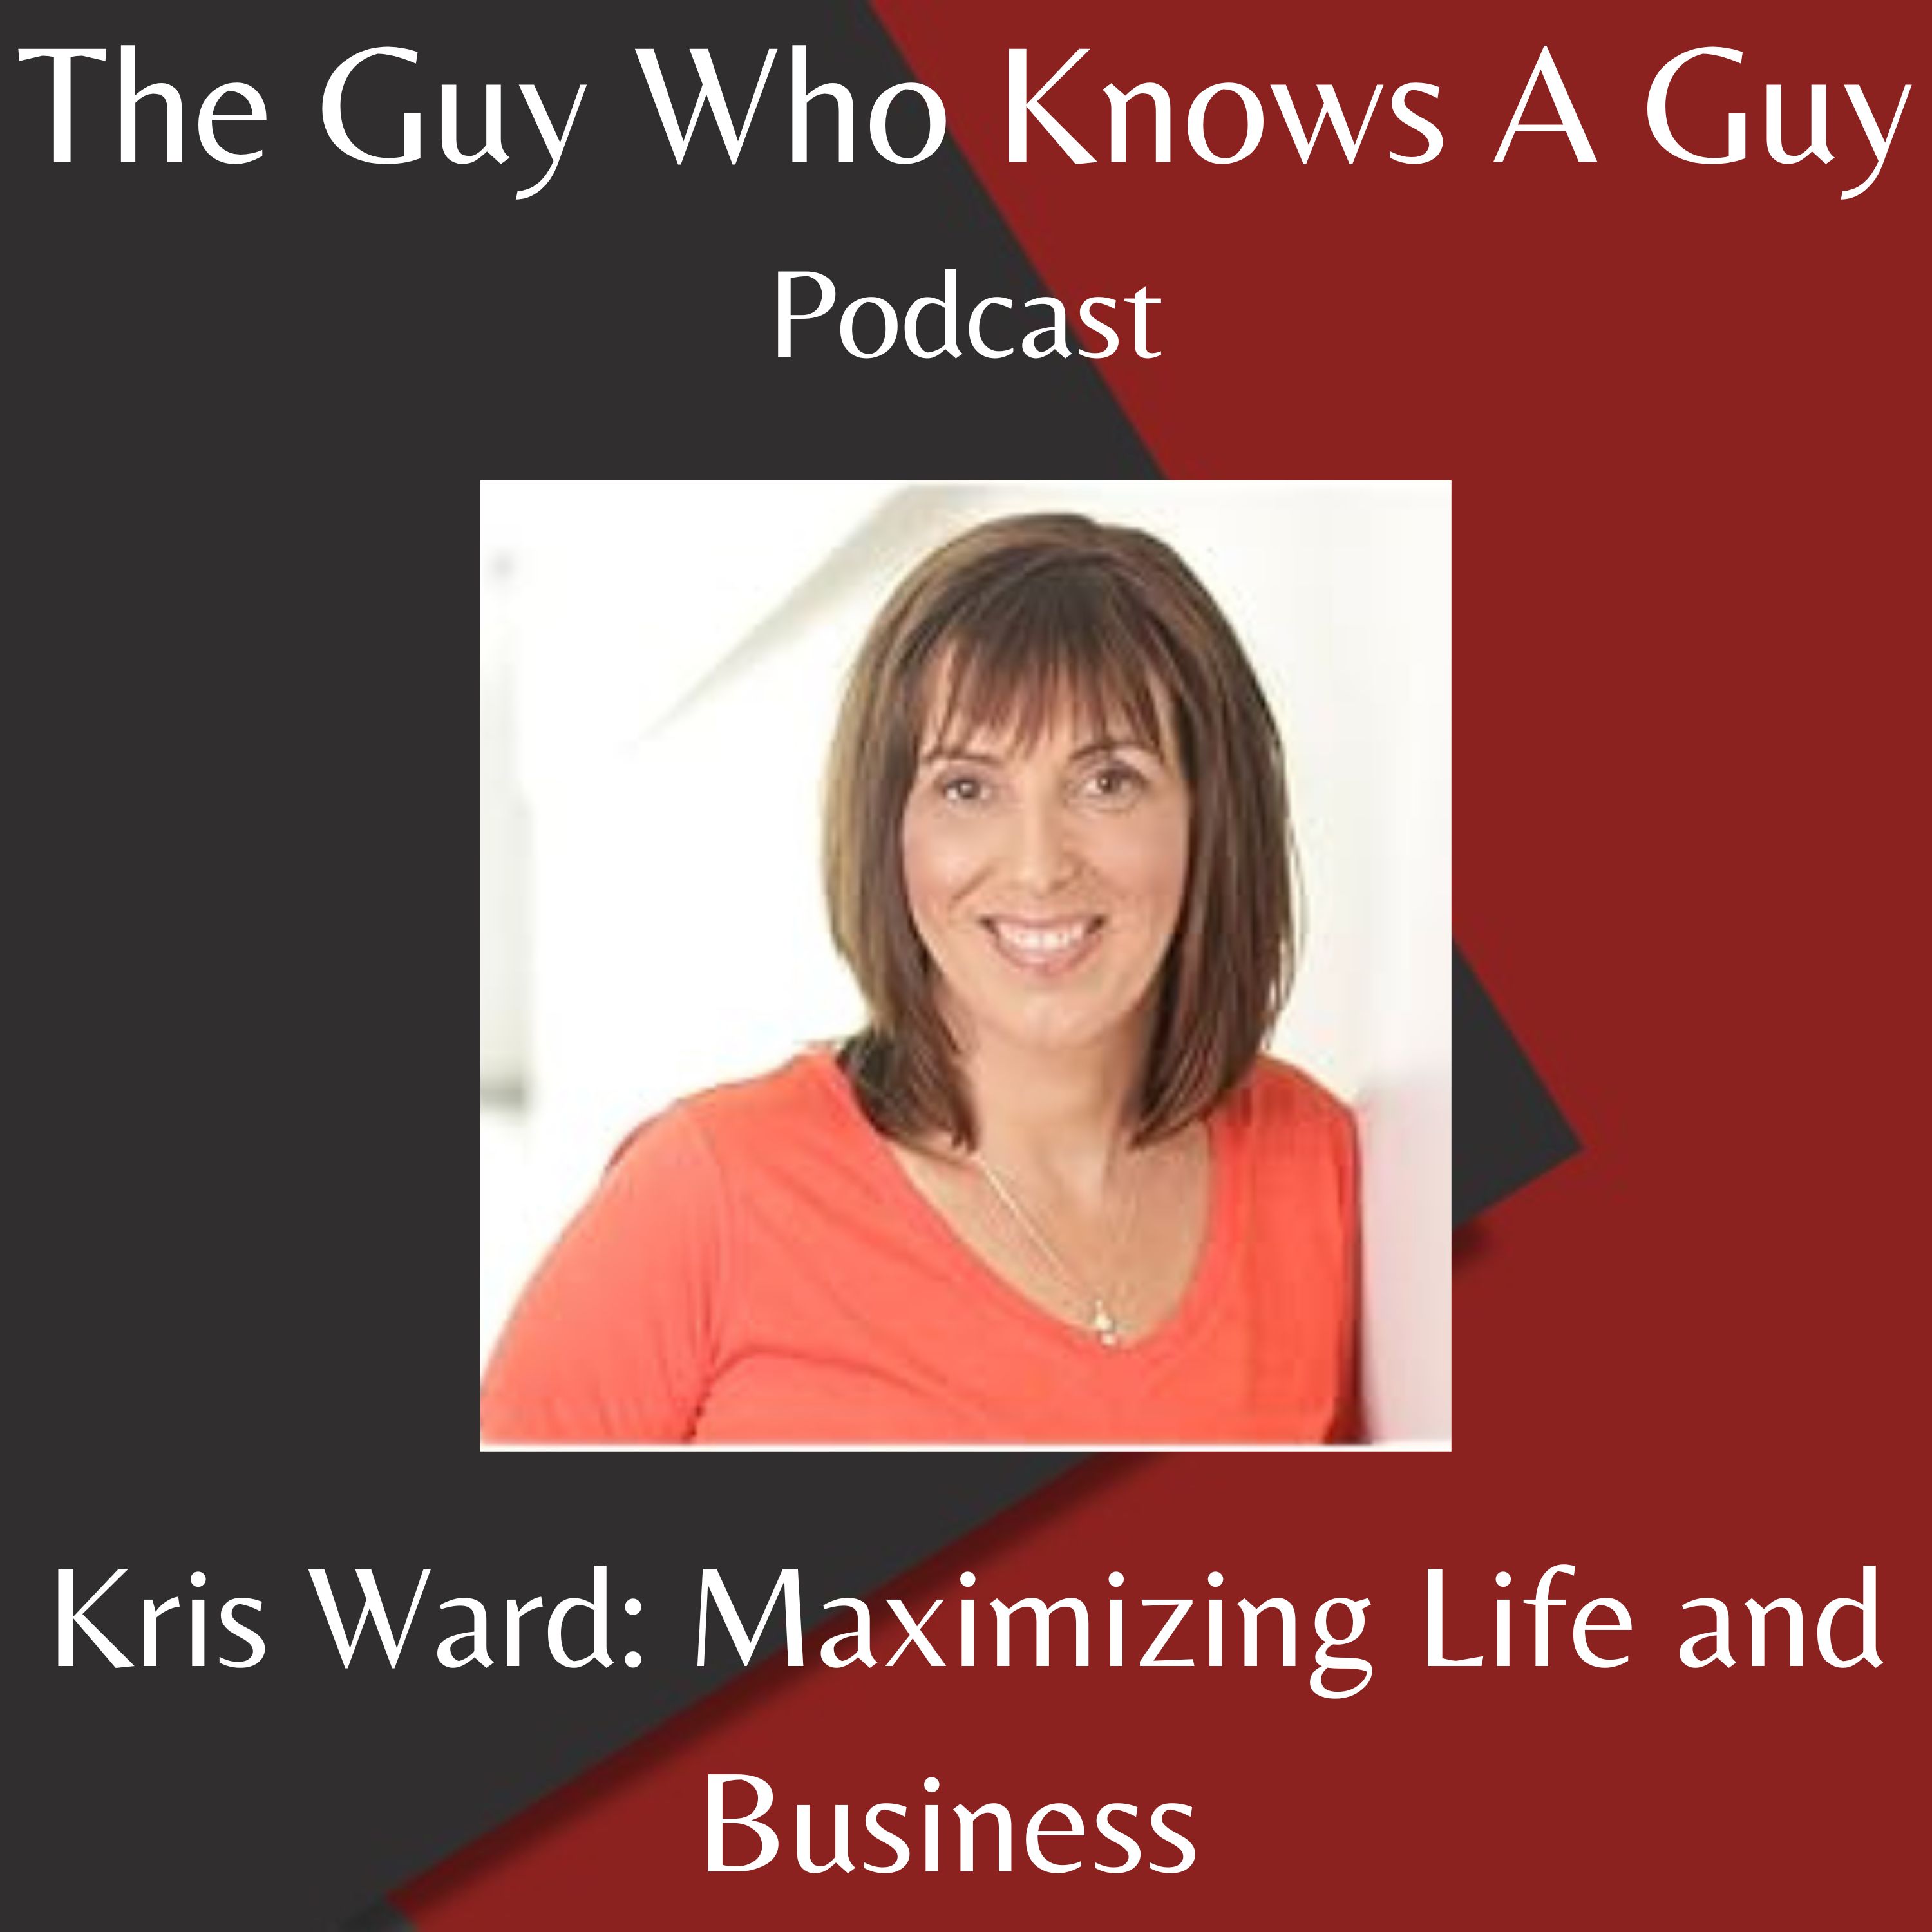 Kris Ward: Maximizing Life and Business